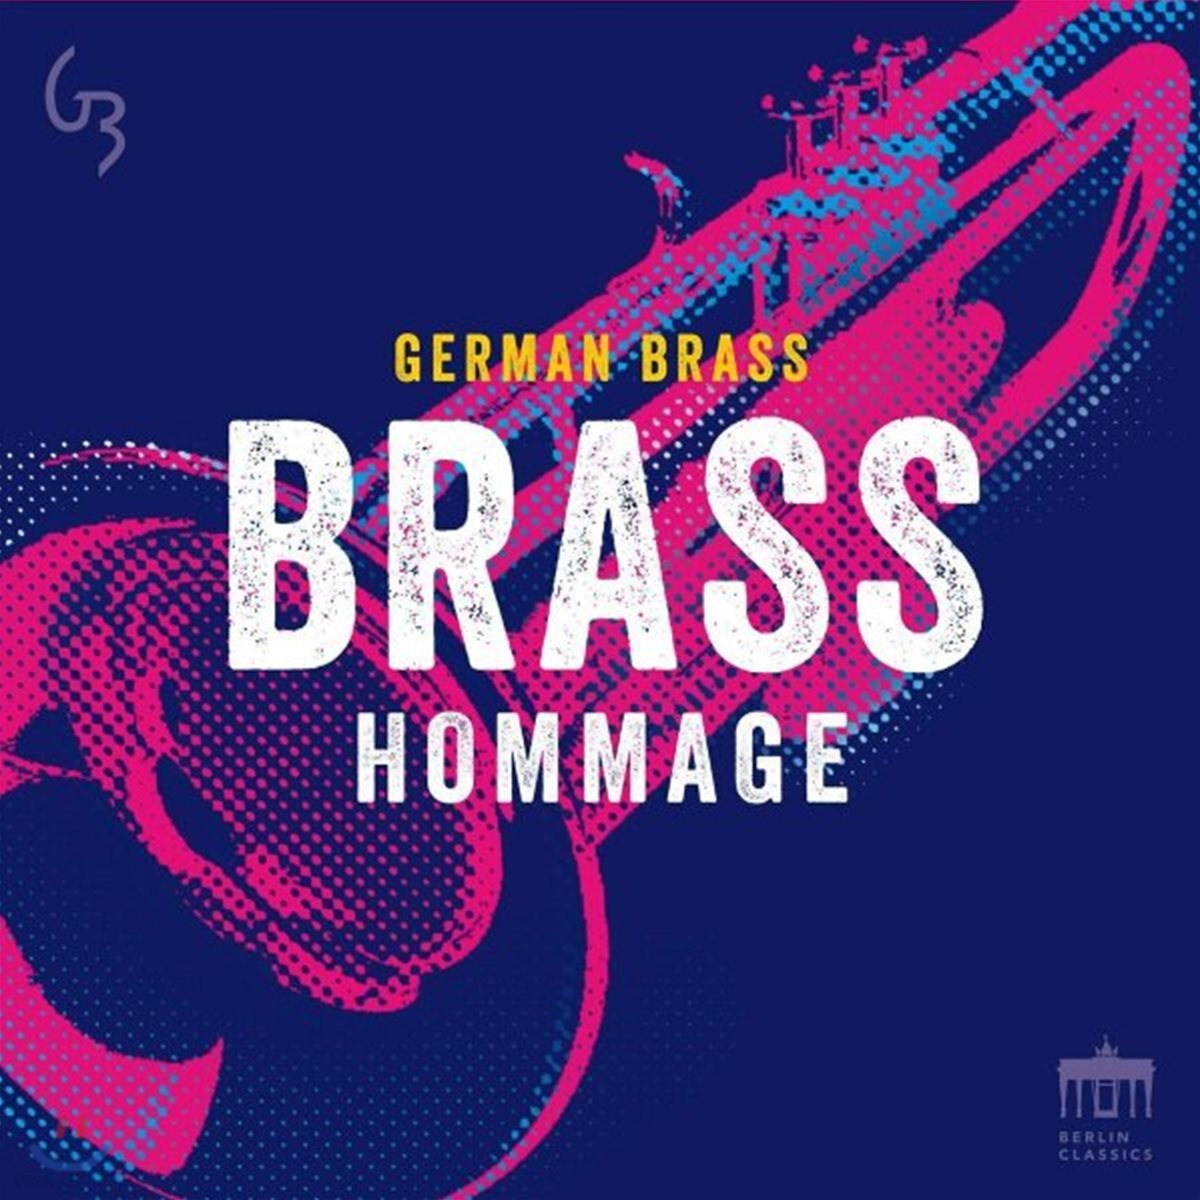 German Brass 관악 앙상블로 듣는 클래식 음악과 팝, 월드 뮤직 (Brass Hommage)